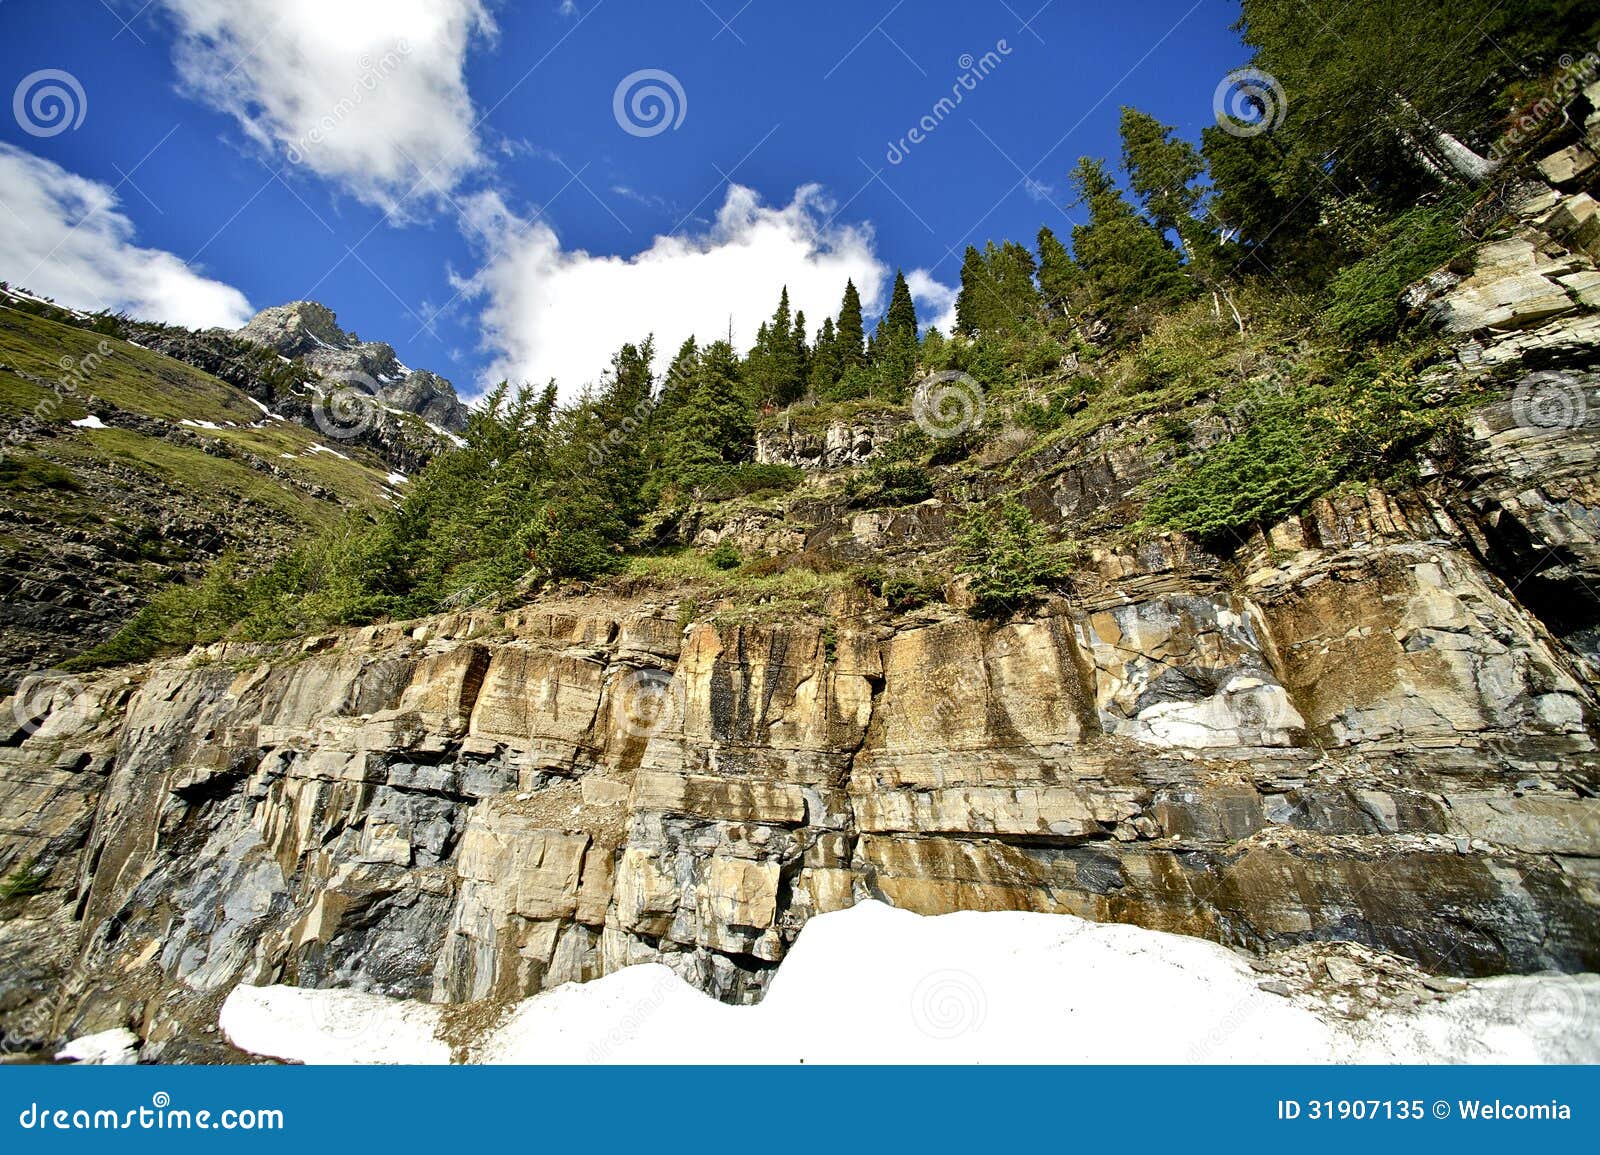 montana geology